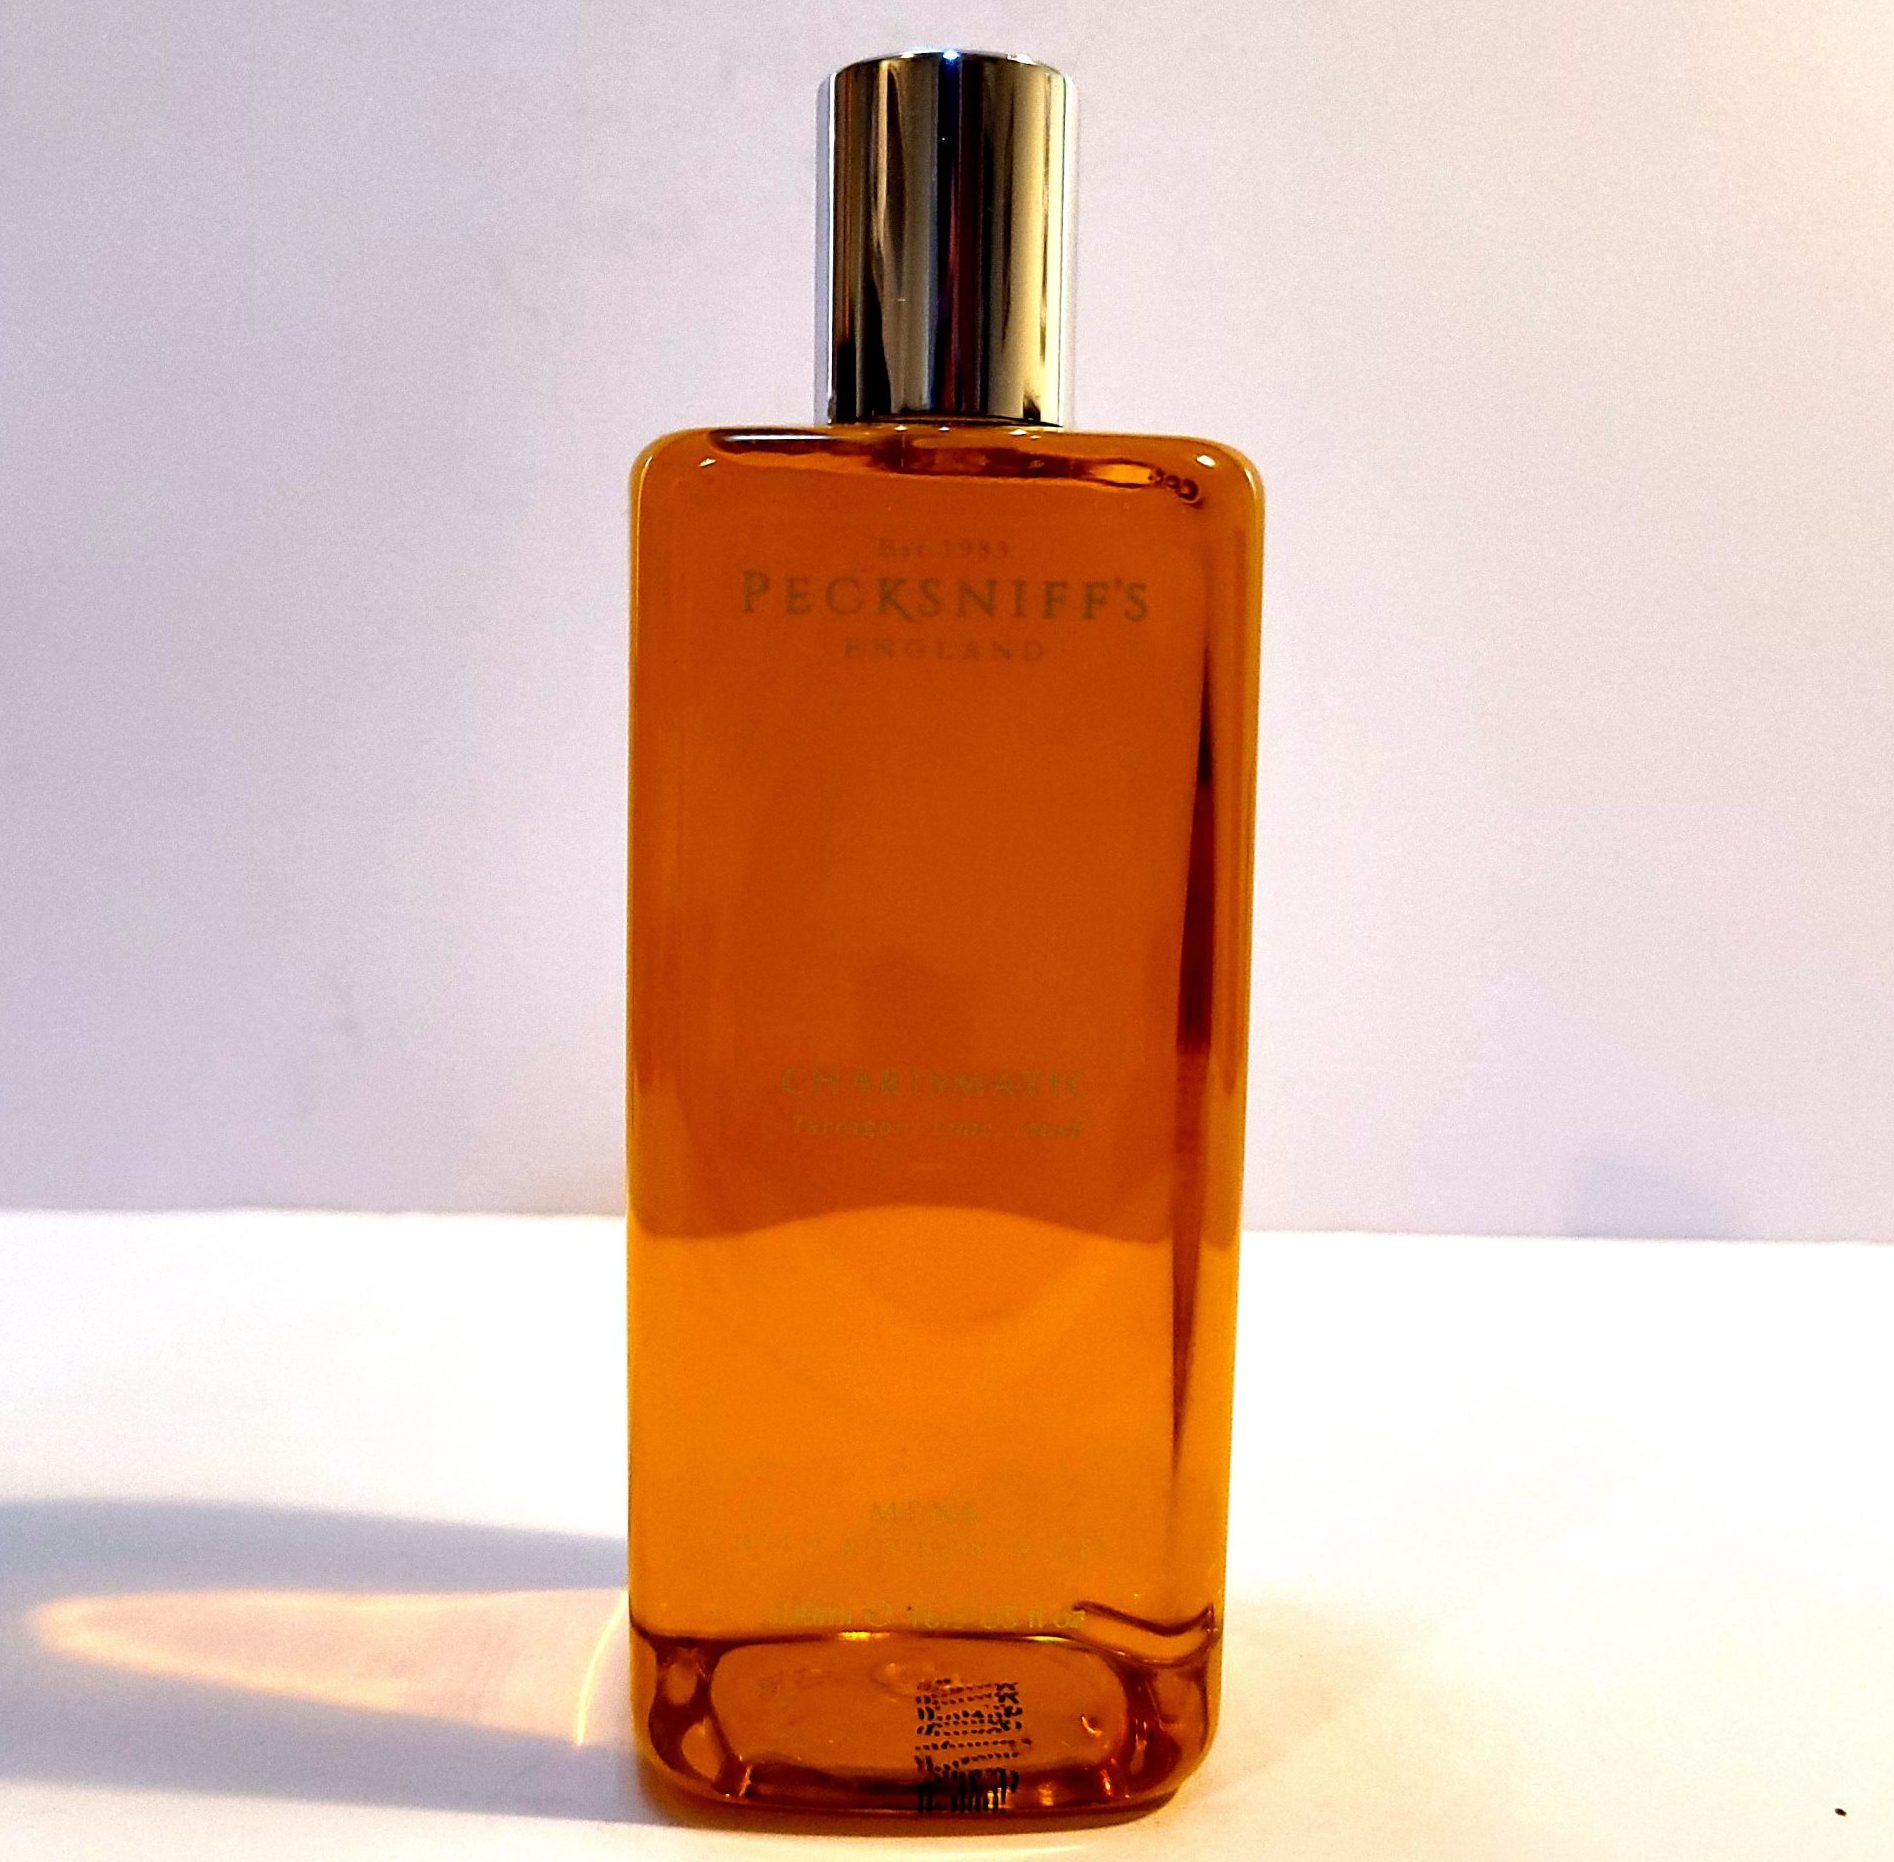 A bottle of Pecksniffs Charismatic Mens Bath & Shower Gel, 500ml sitting on a white surface.